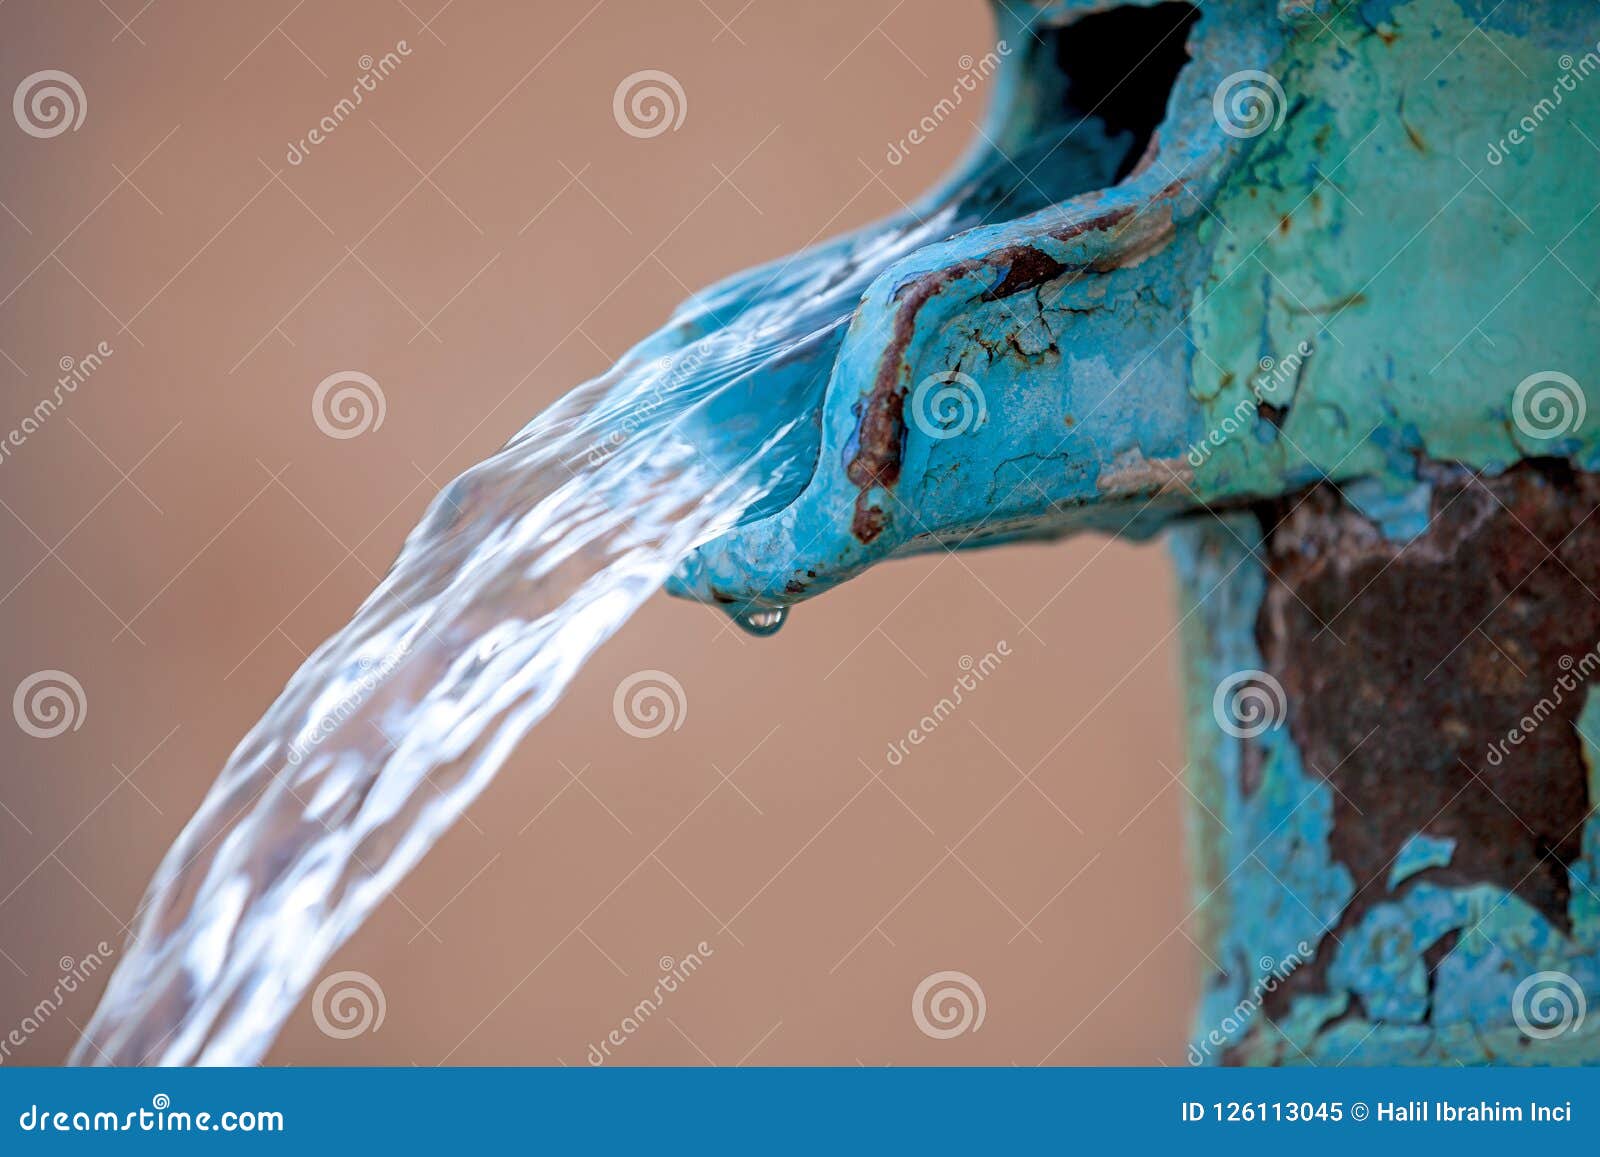 water pump detail